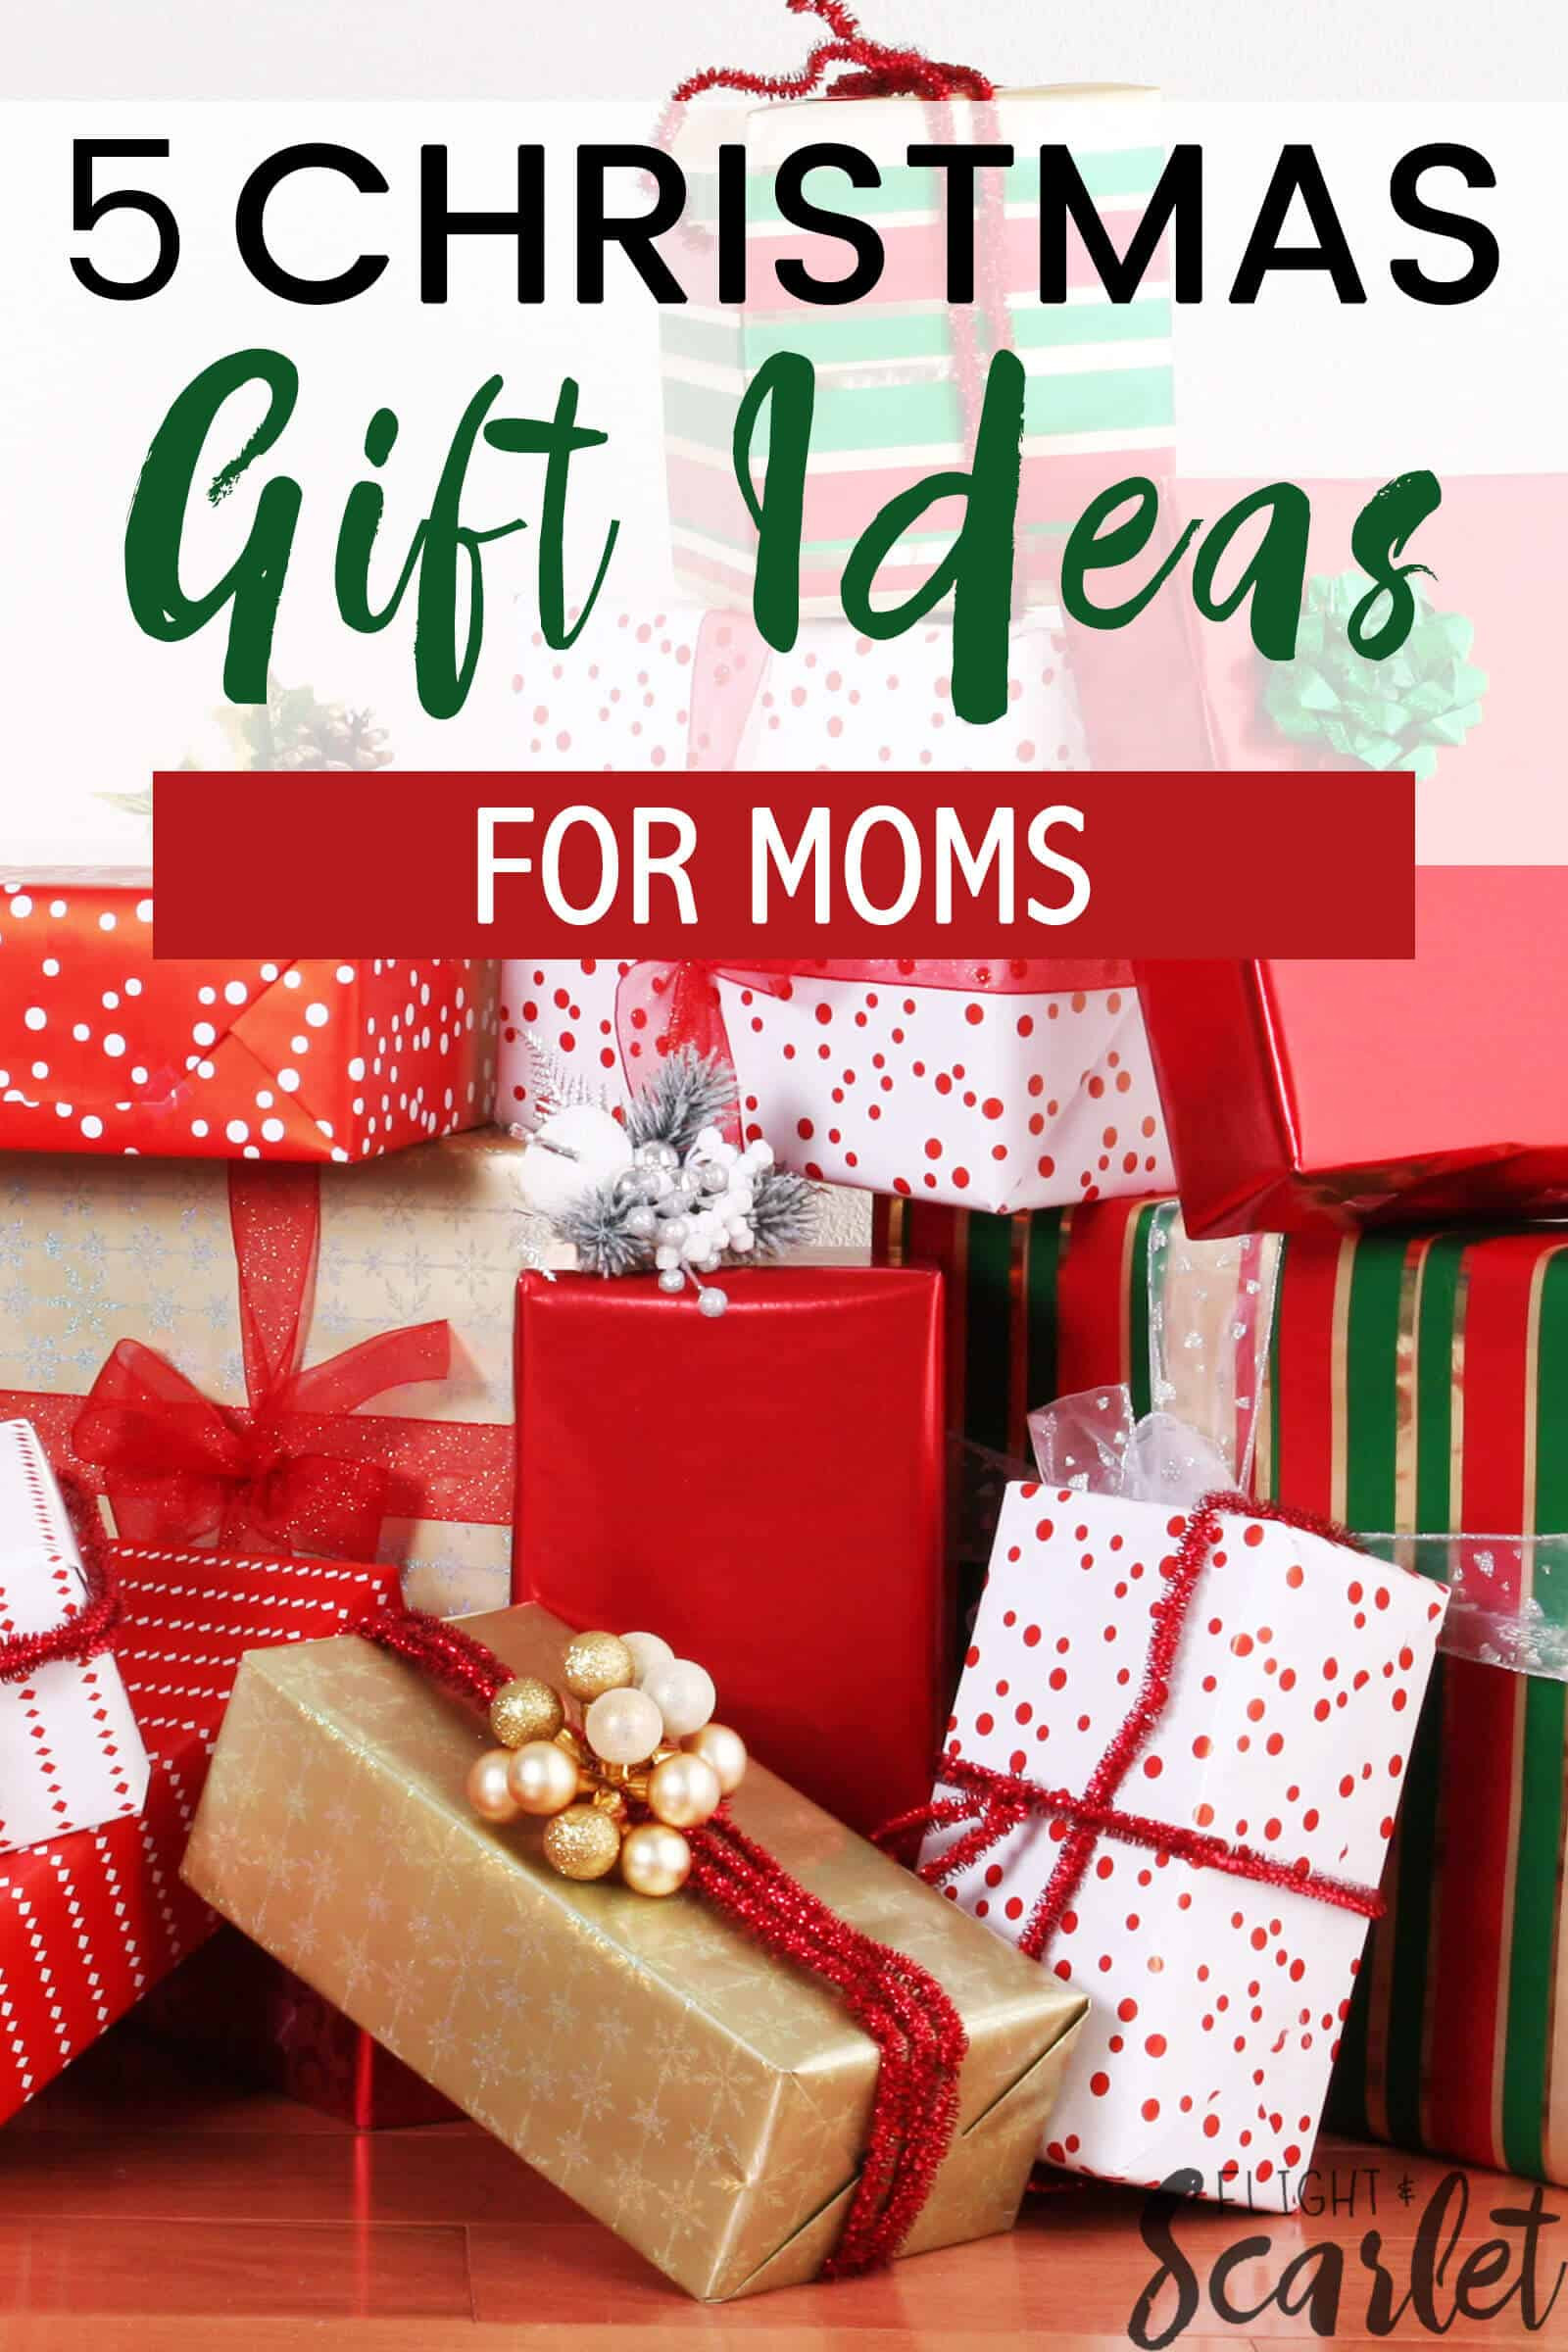 Christmas Gift Ideas For Mom
 5 Bud Friendly Gift Ideas For Moms Flight & Scarlet